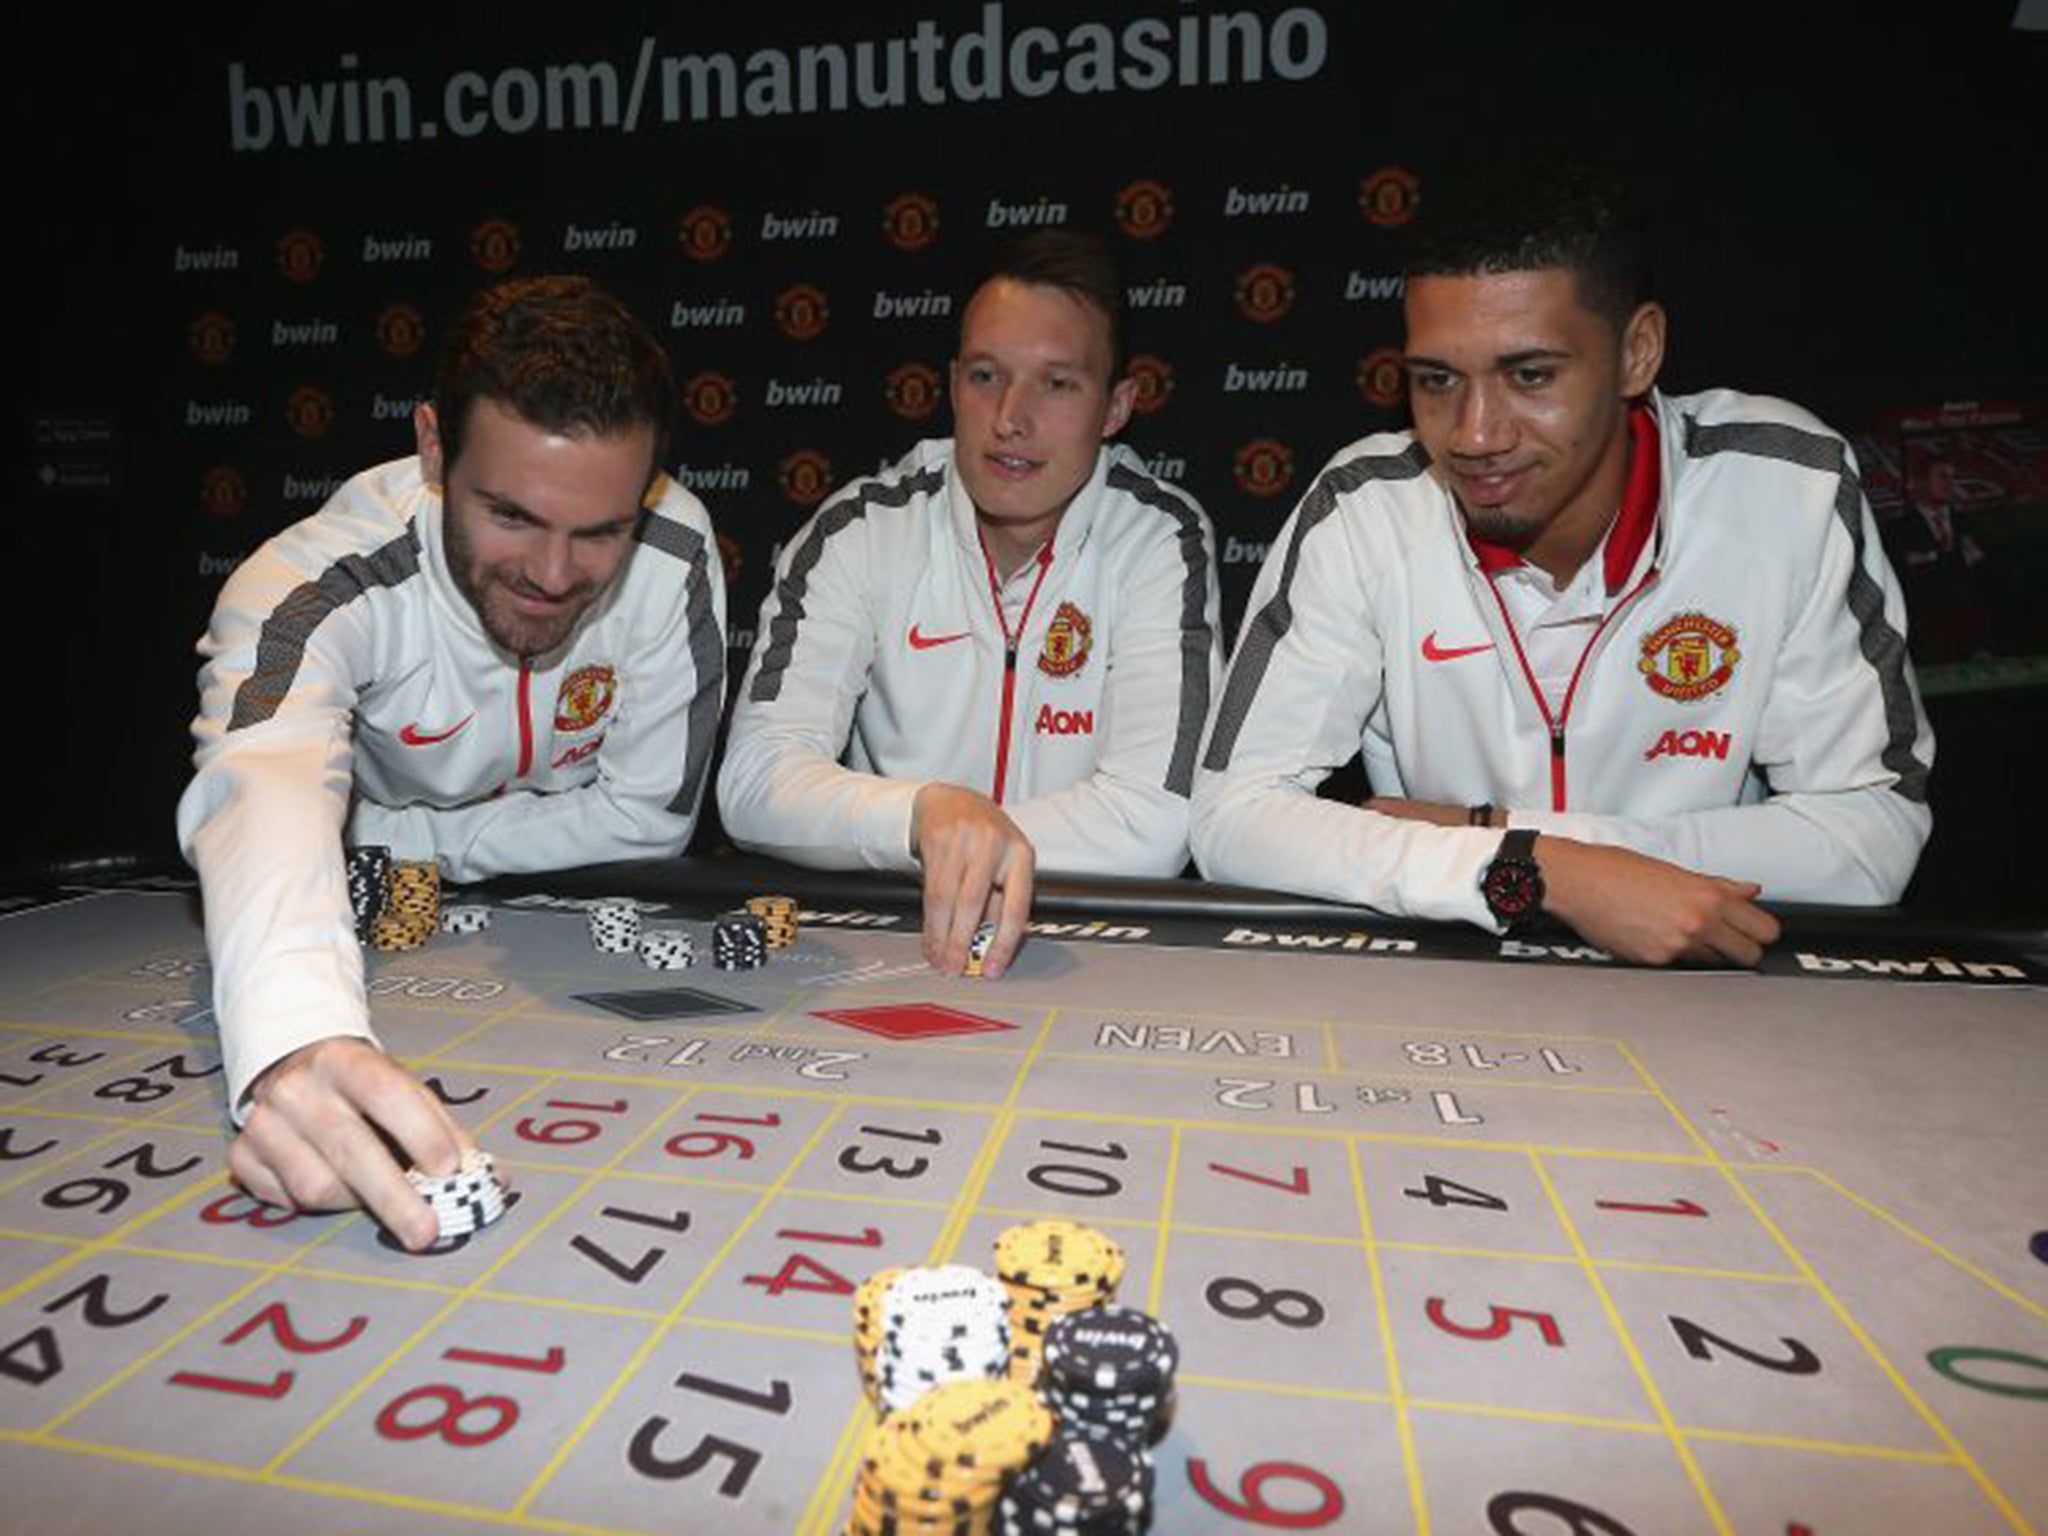 Bwin runs Manchester United FC’s casino